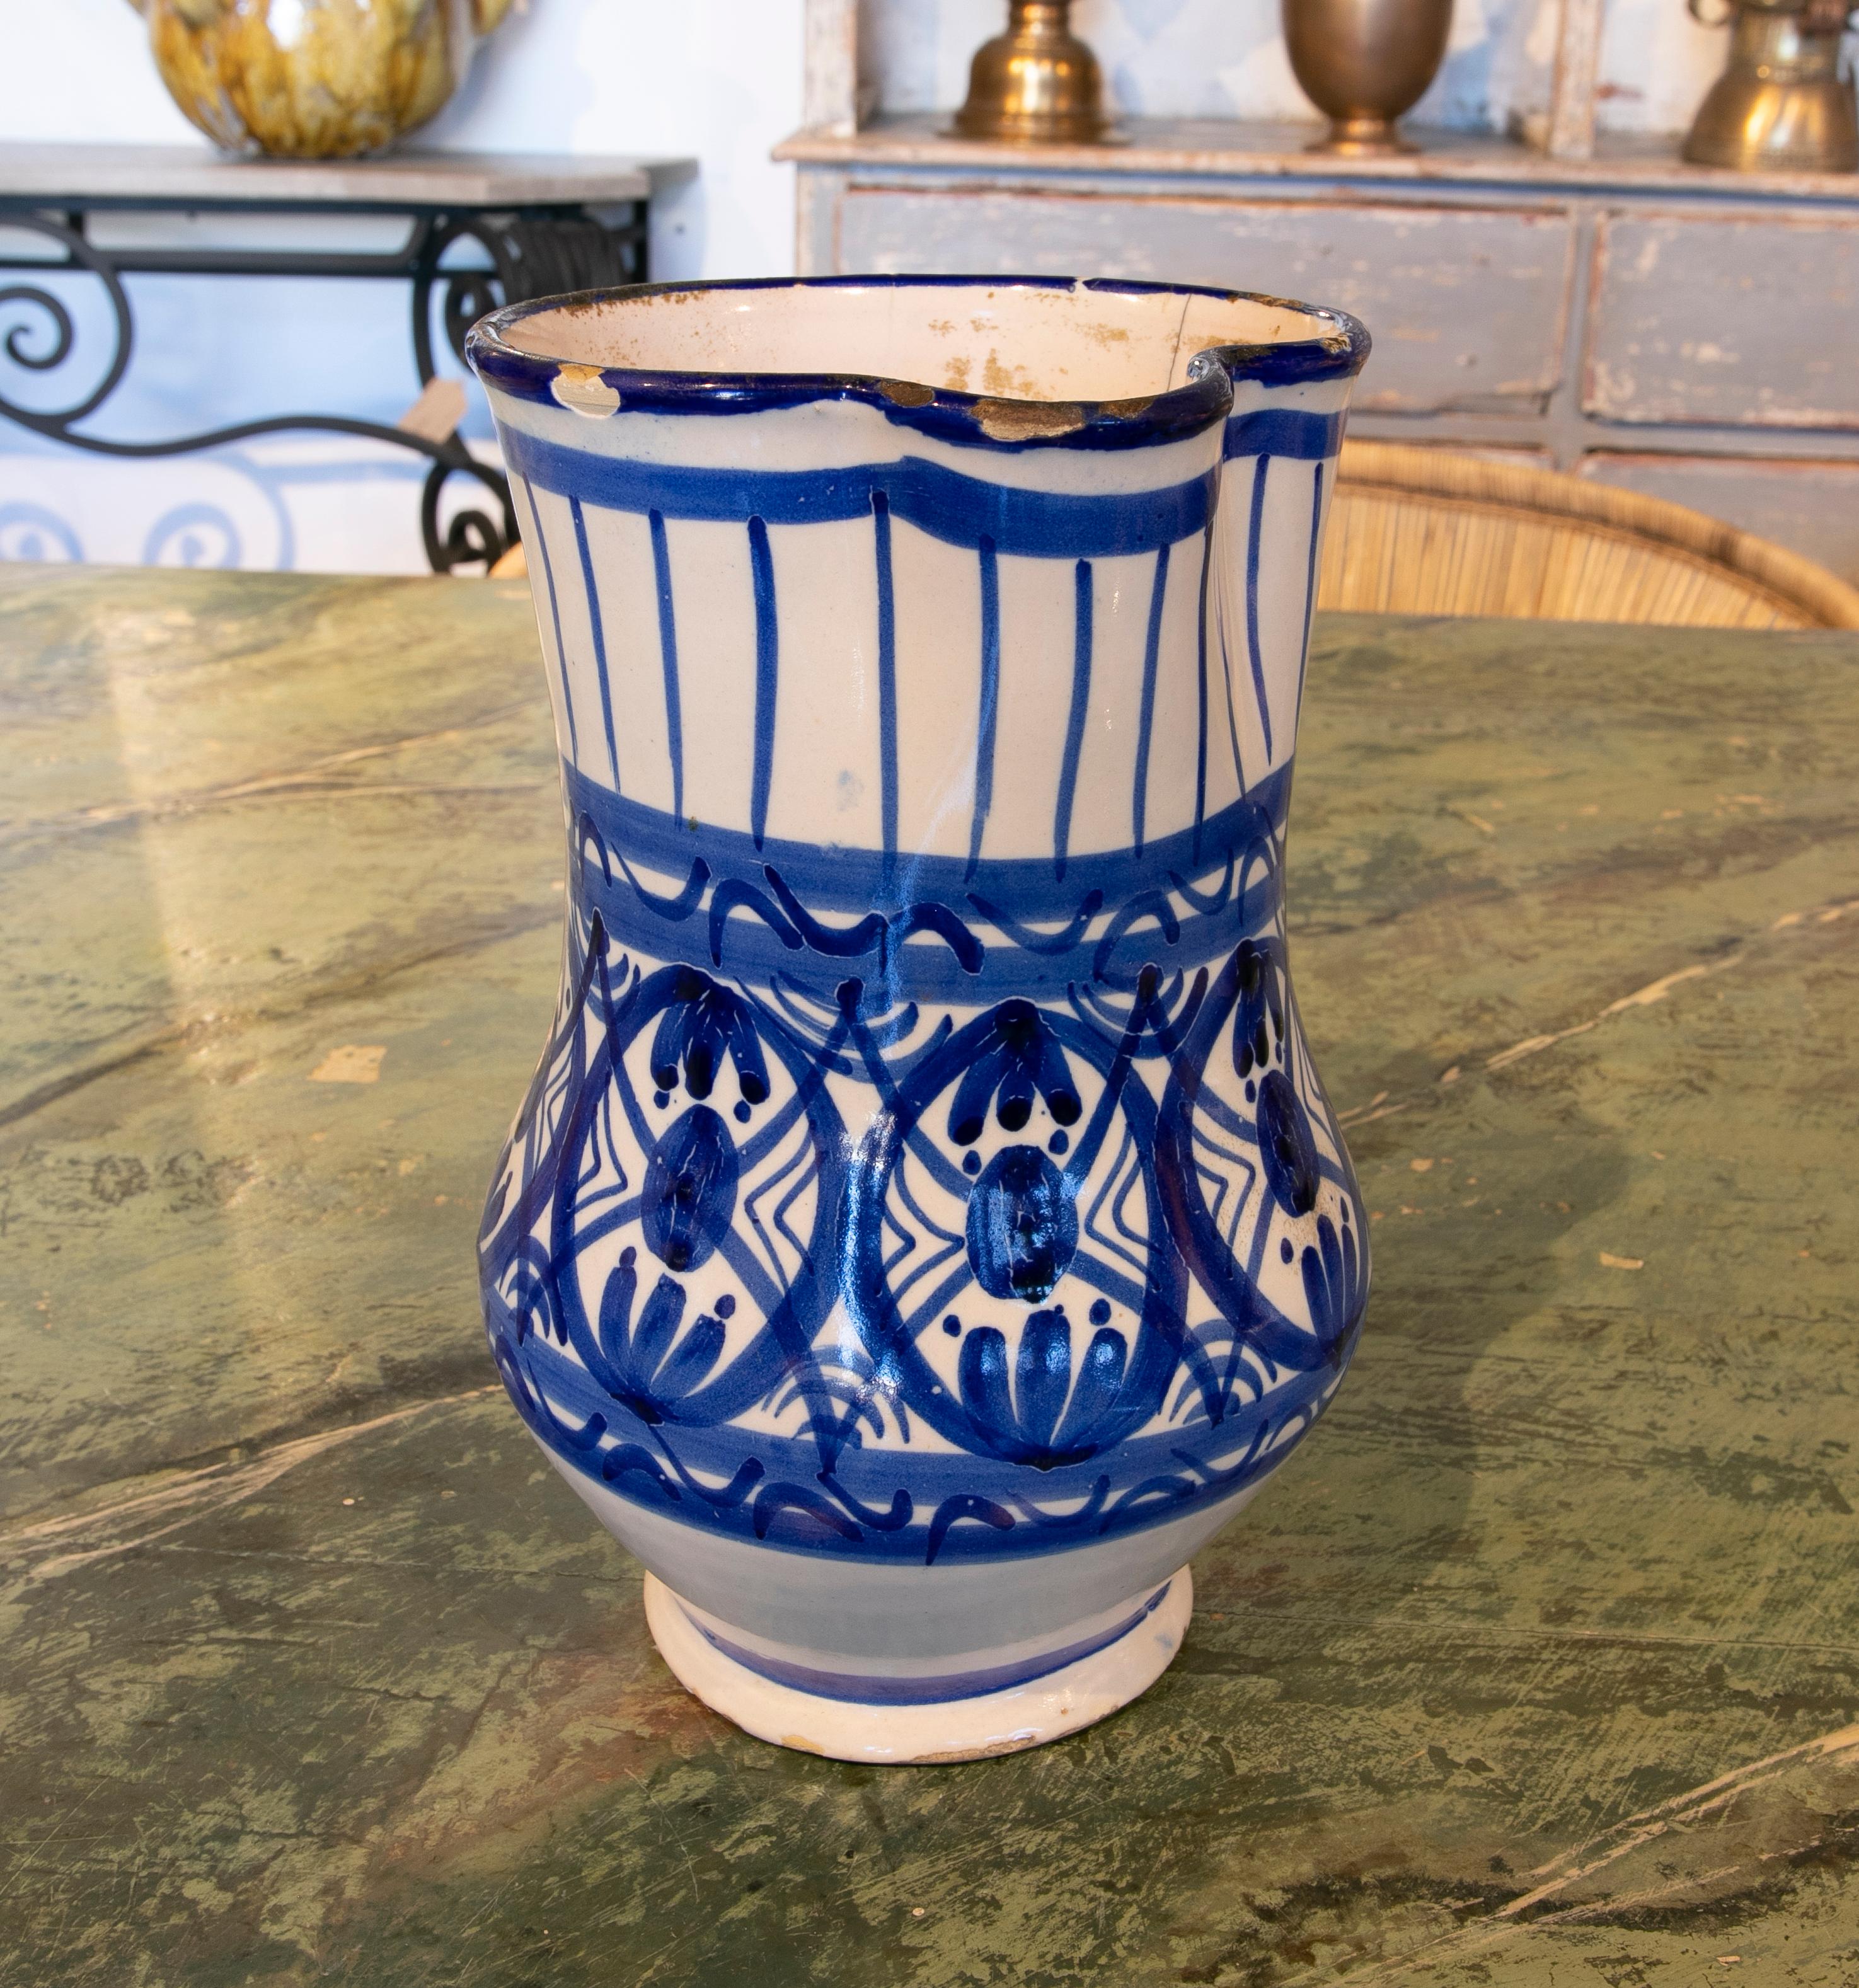 19th century Spanish Glazed Ceramic jug with handle in Tones of blue.